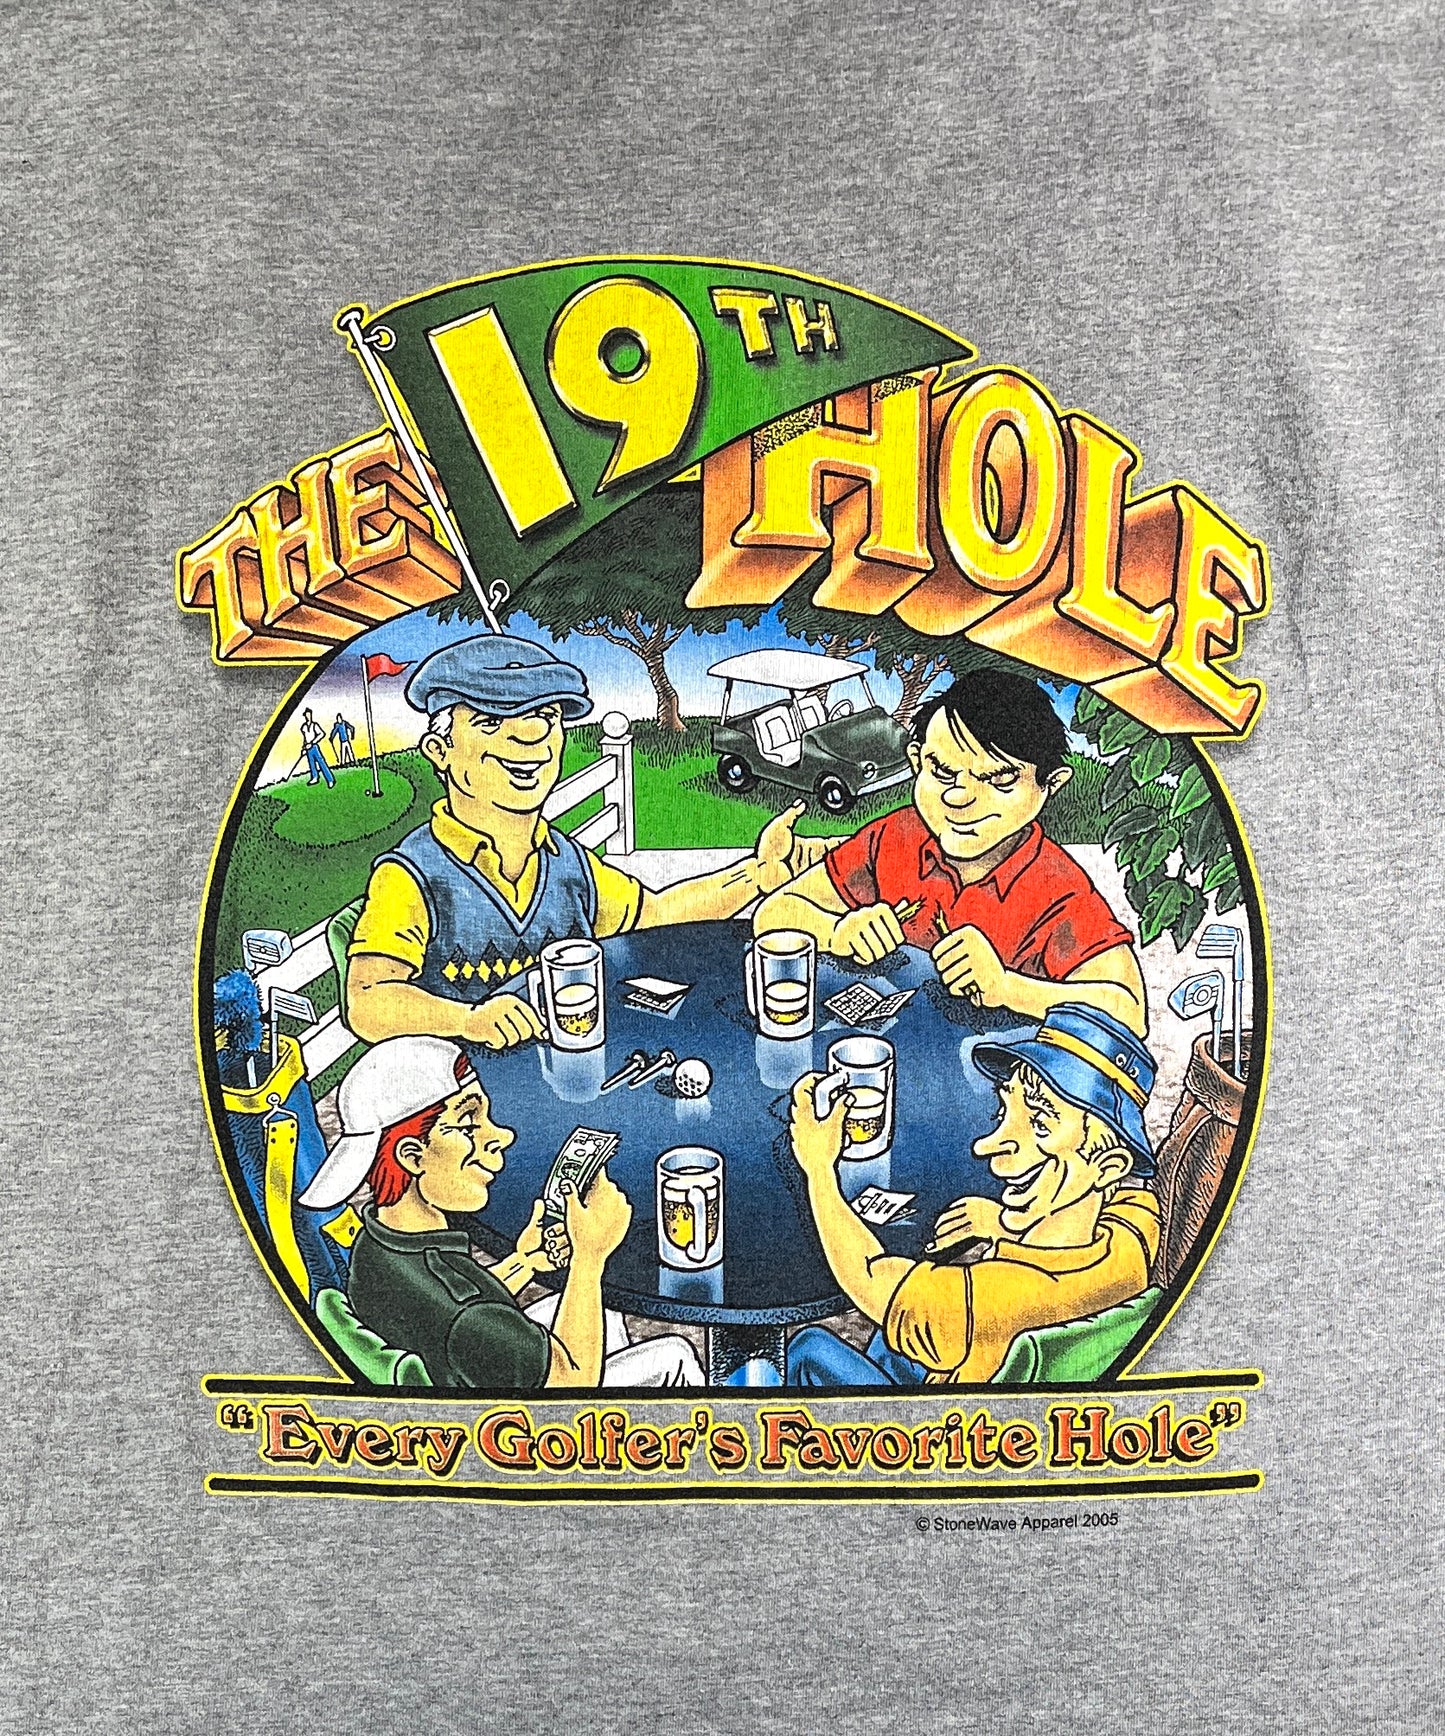 Vintage 19th Hole T-Shirt Golf Shirt Funny